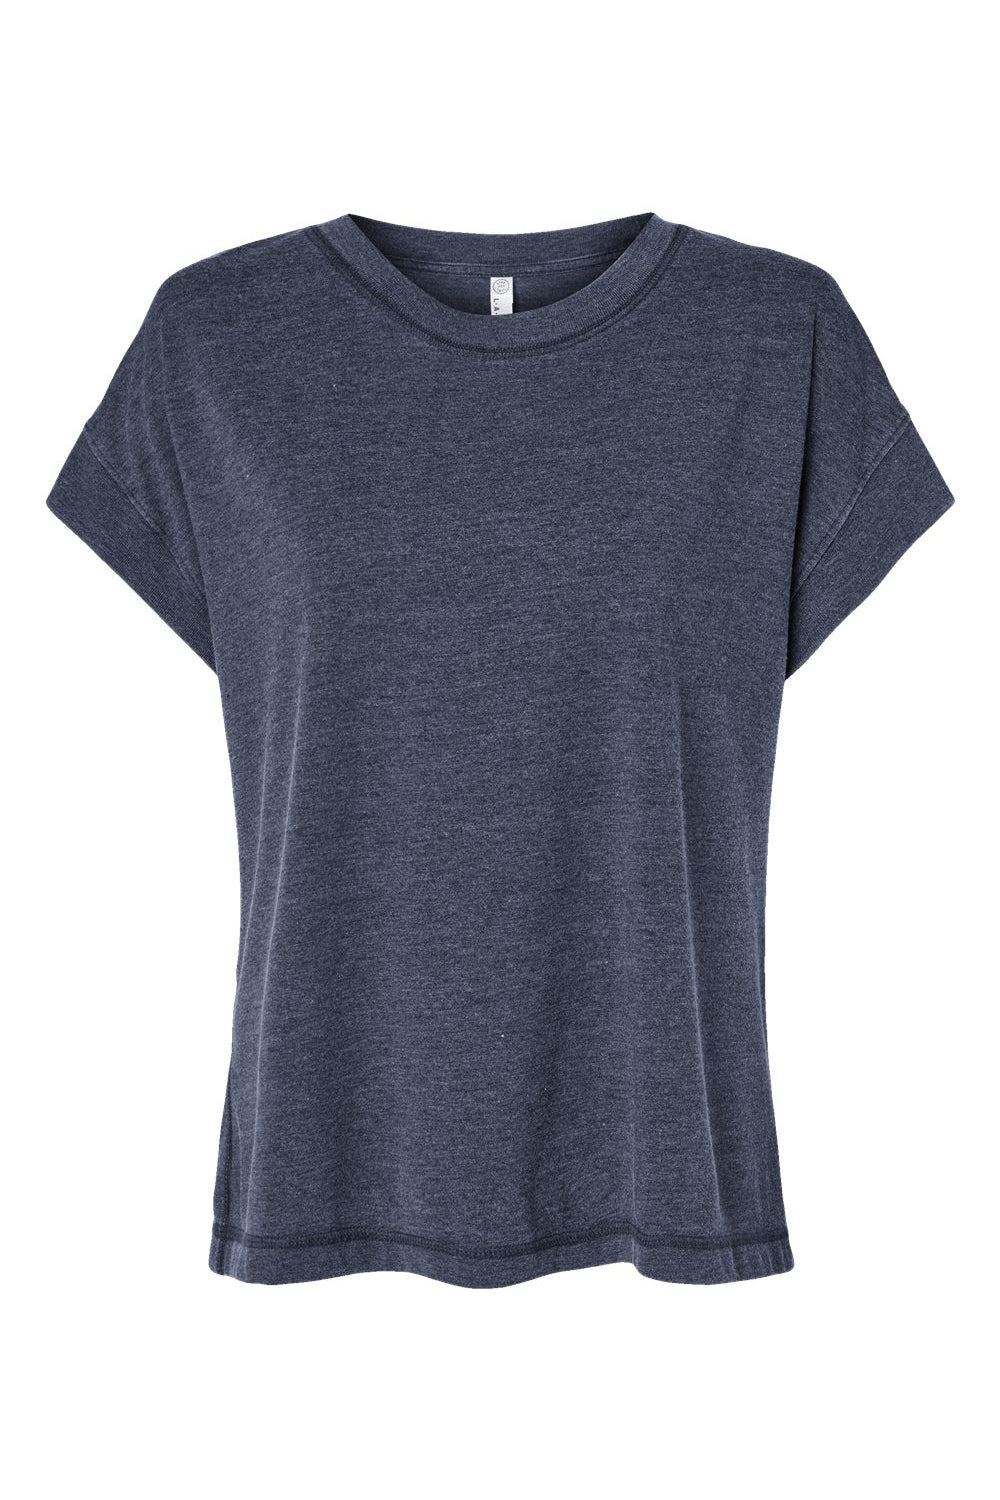 LAT 3502 Womens Relaxed Vintage Wash Short Sleeve Crewneck T-Shirt Navy Blue Flat Front